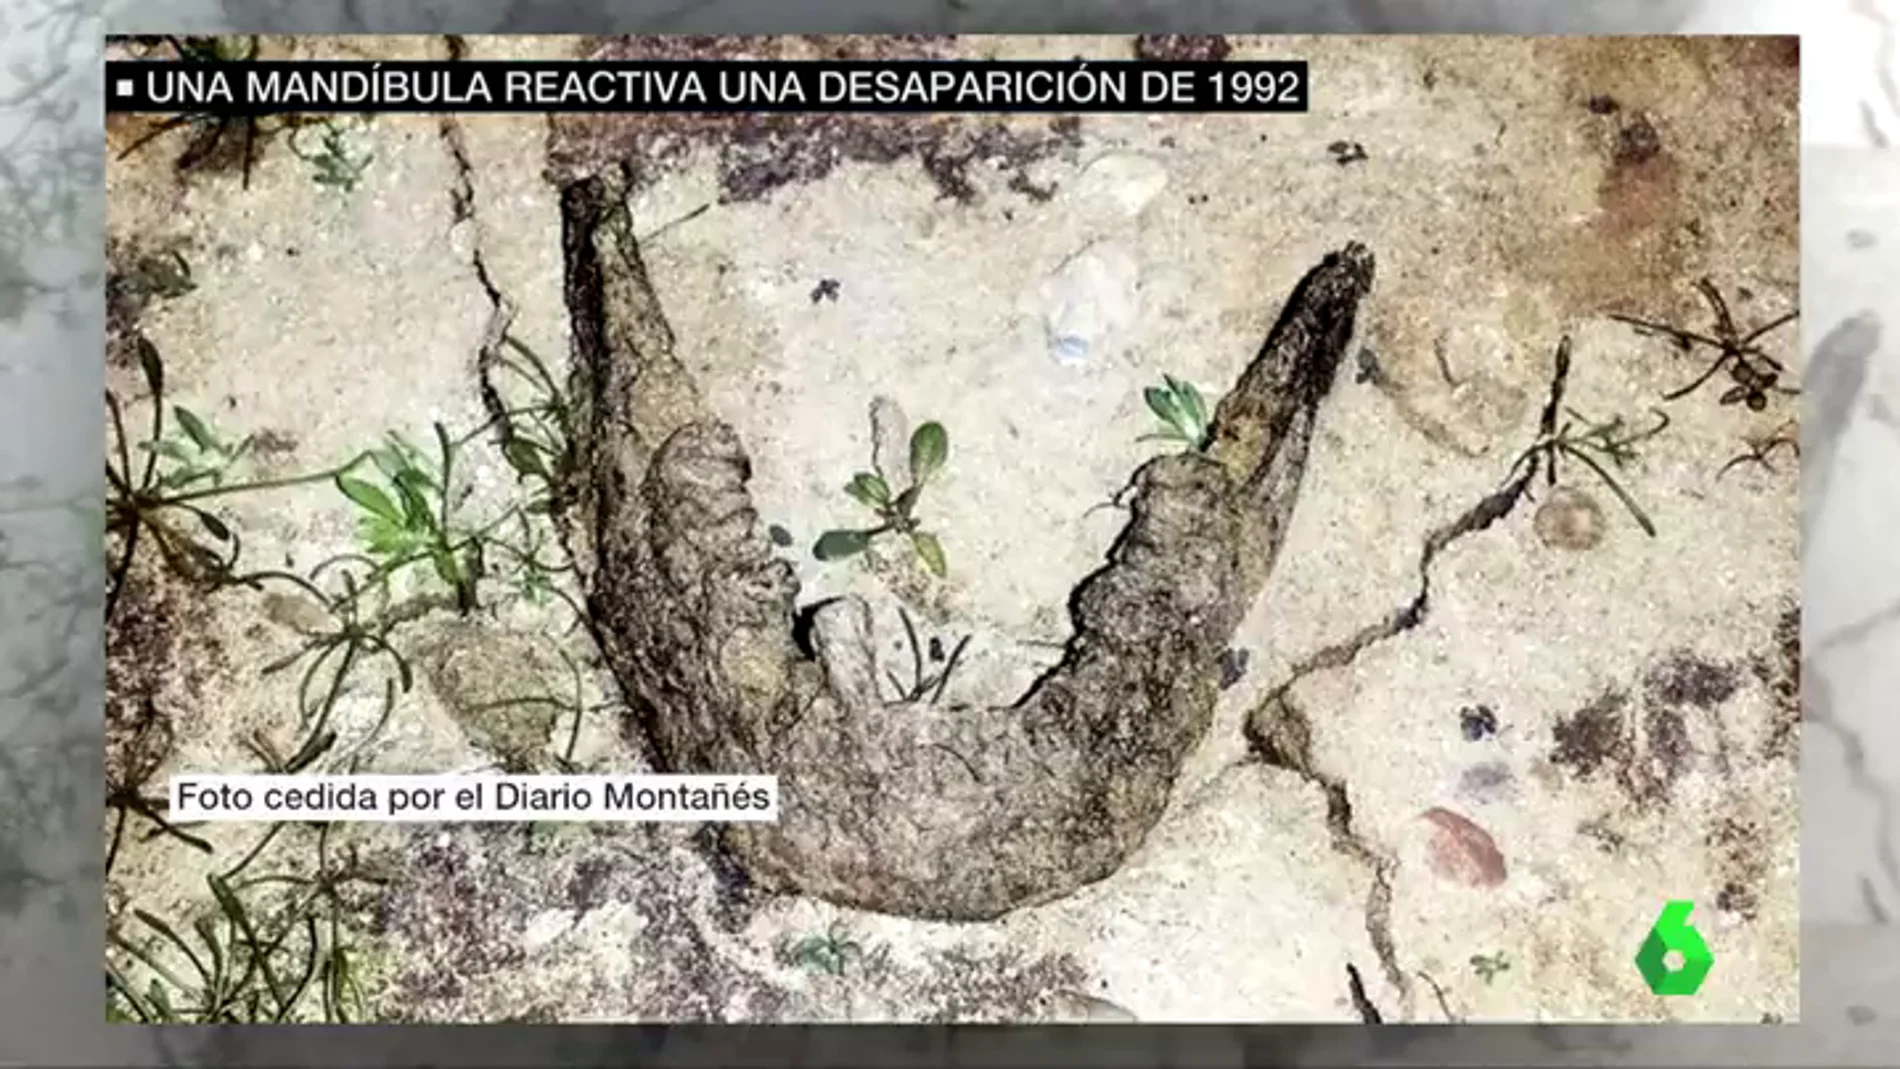 Mandíbula encontrada en el pantano del Ebro